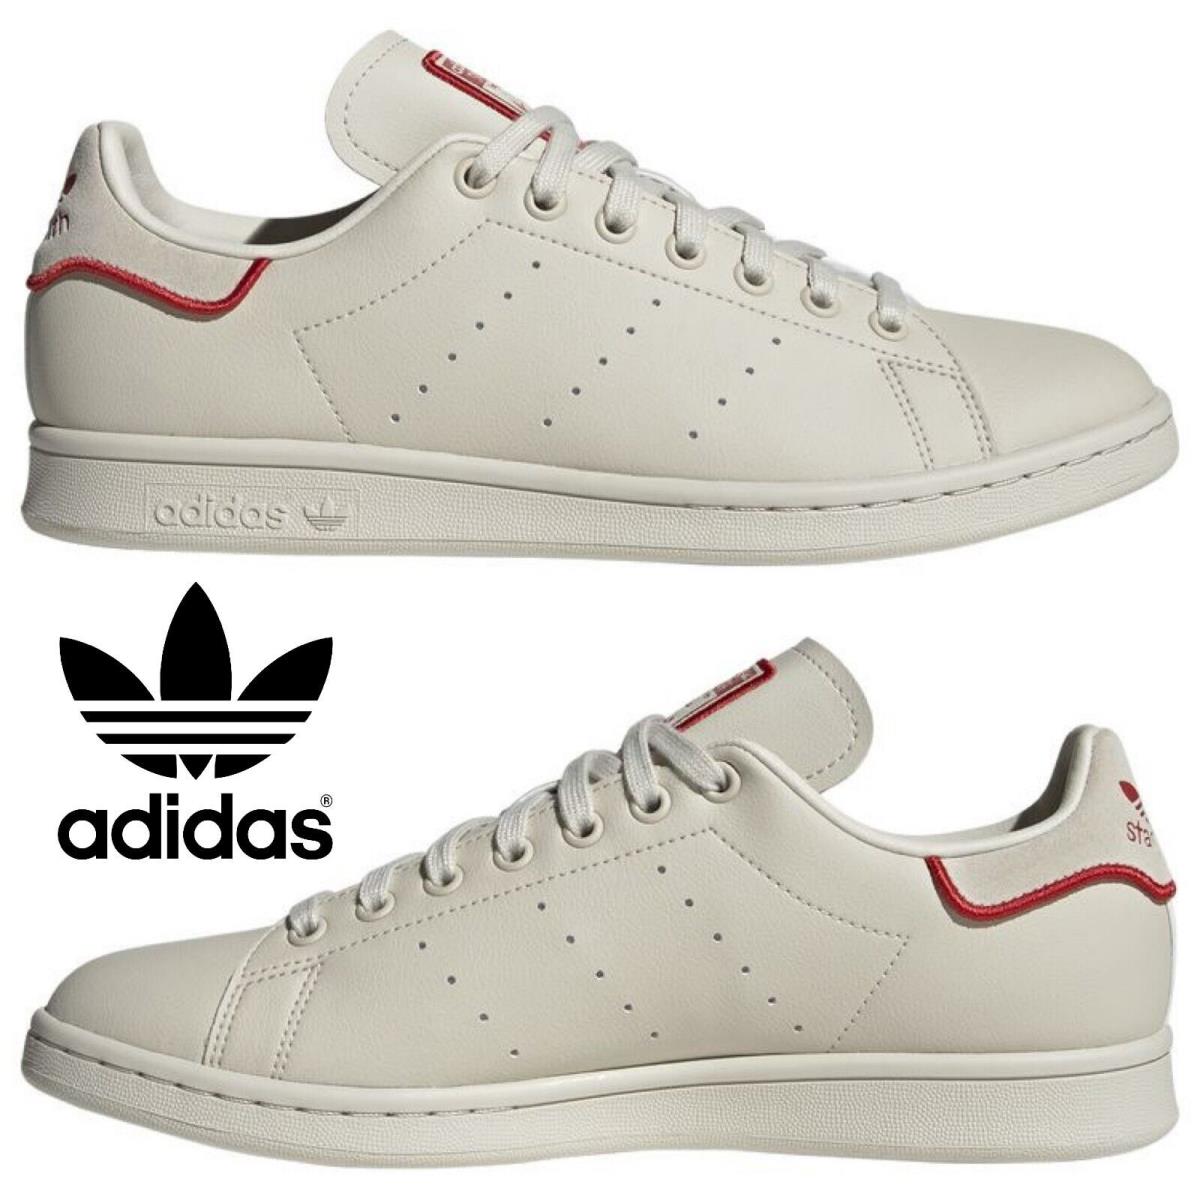 Adidas Originals Stan Smith Men`s Sneakers Comfort Sport Casual Shoes Aluminum